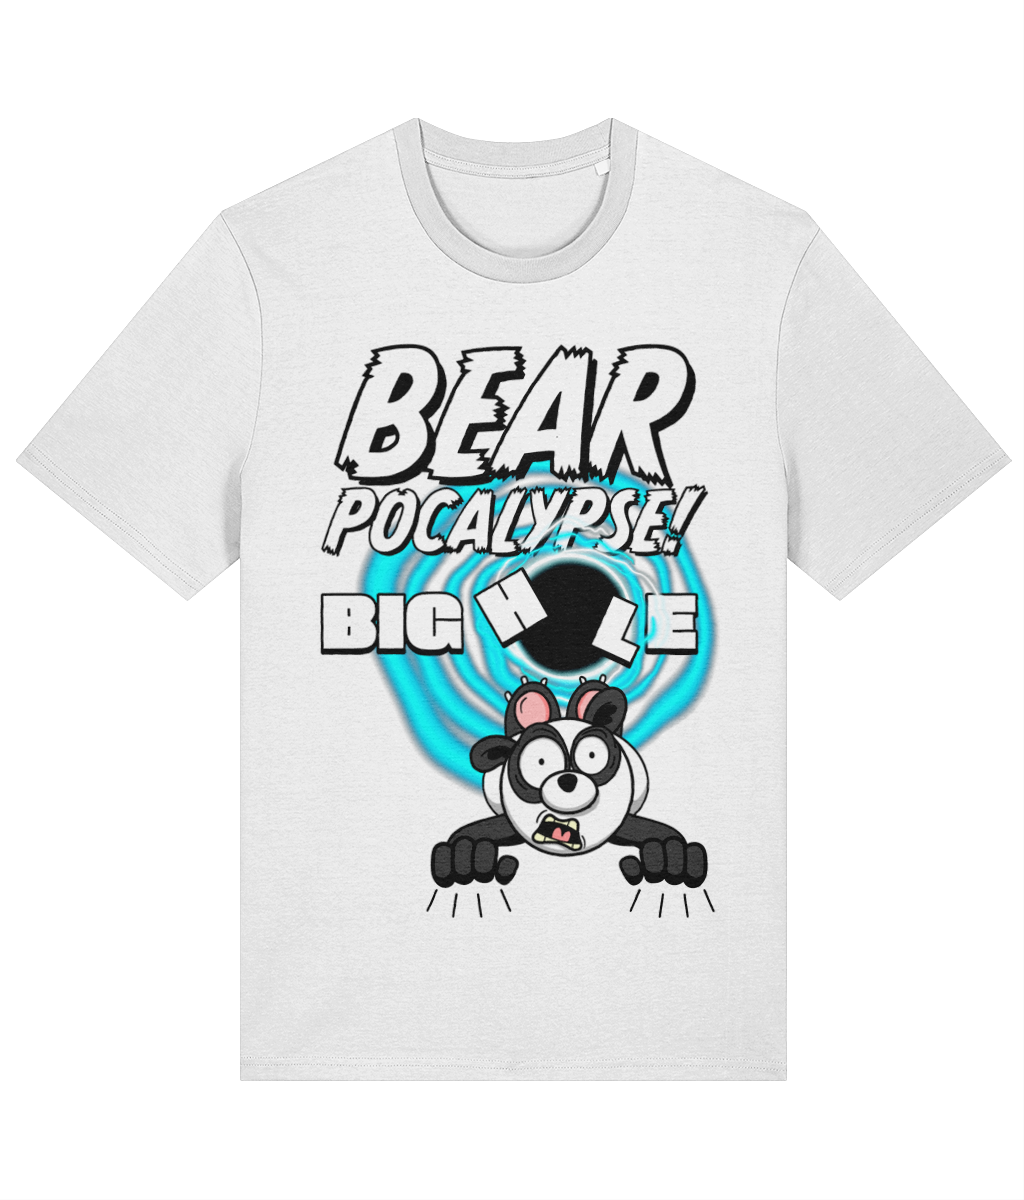 BEARPOCALYPSE! - Big Hole T-Shirt